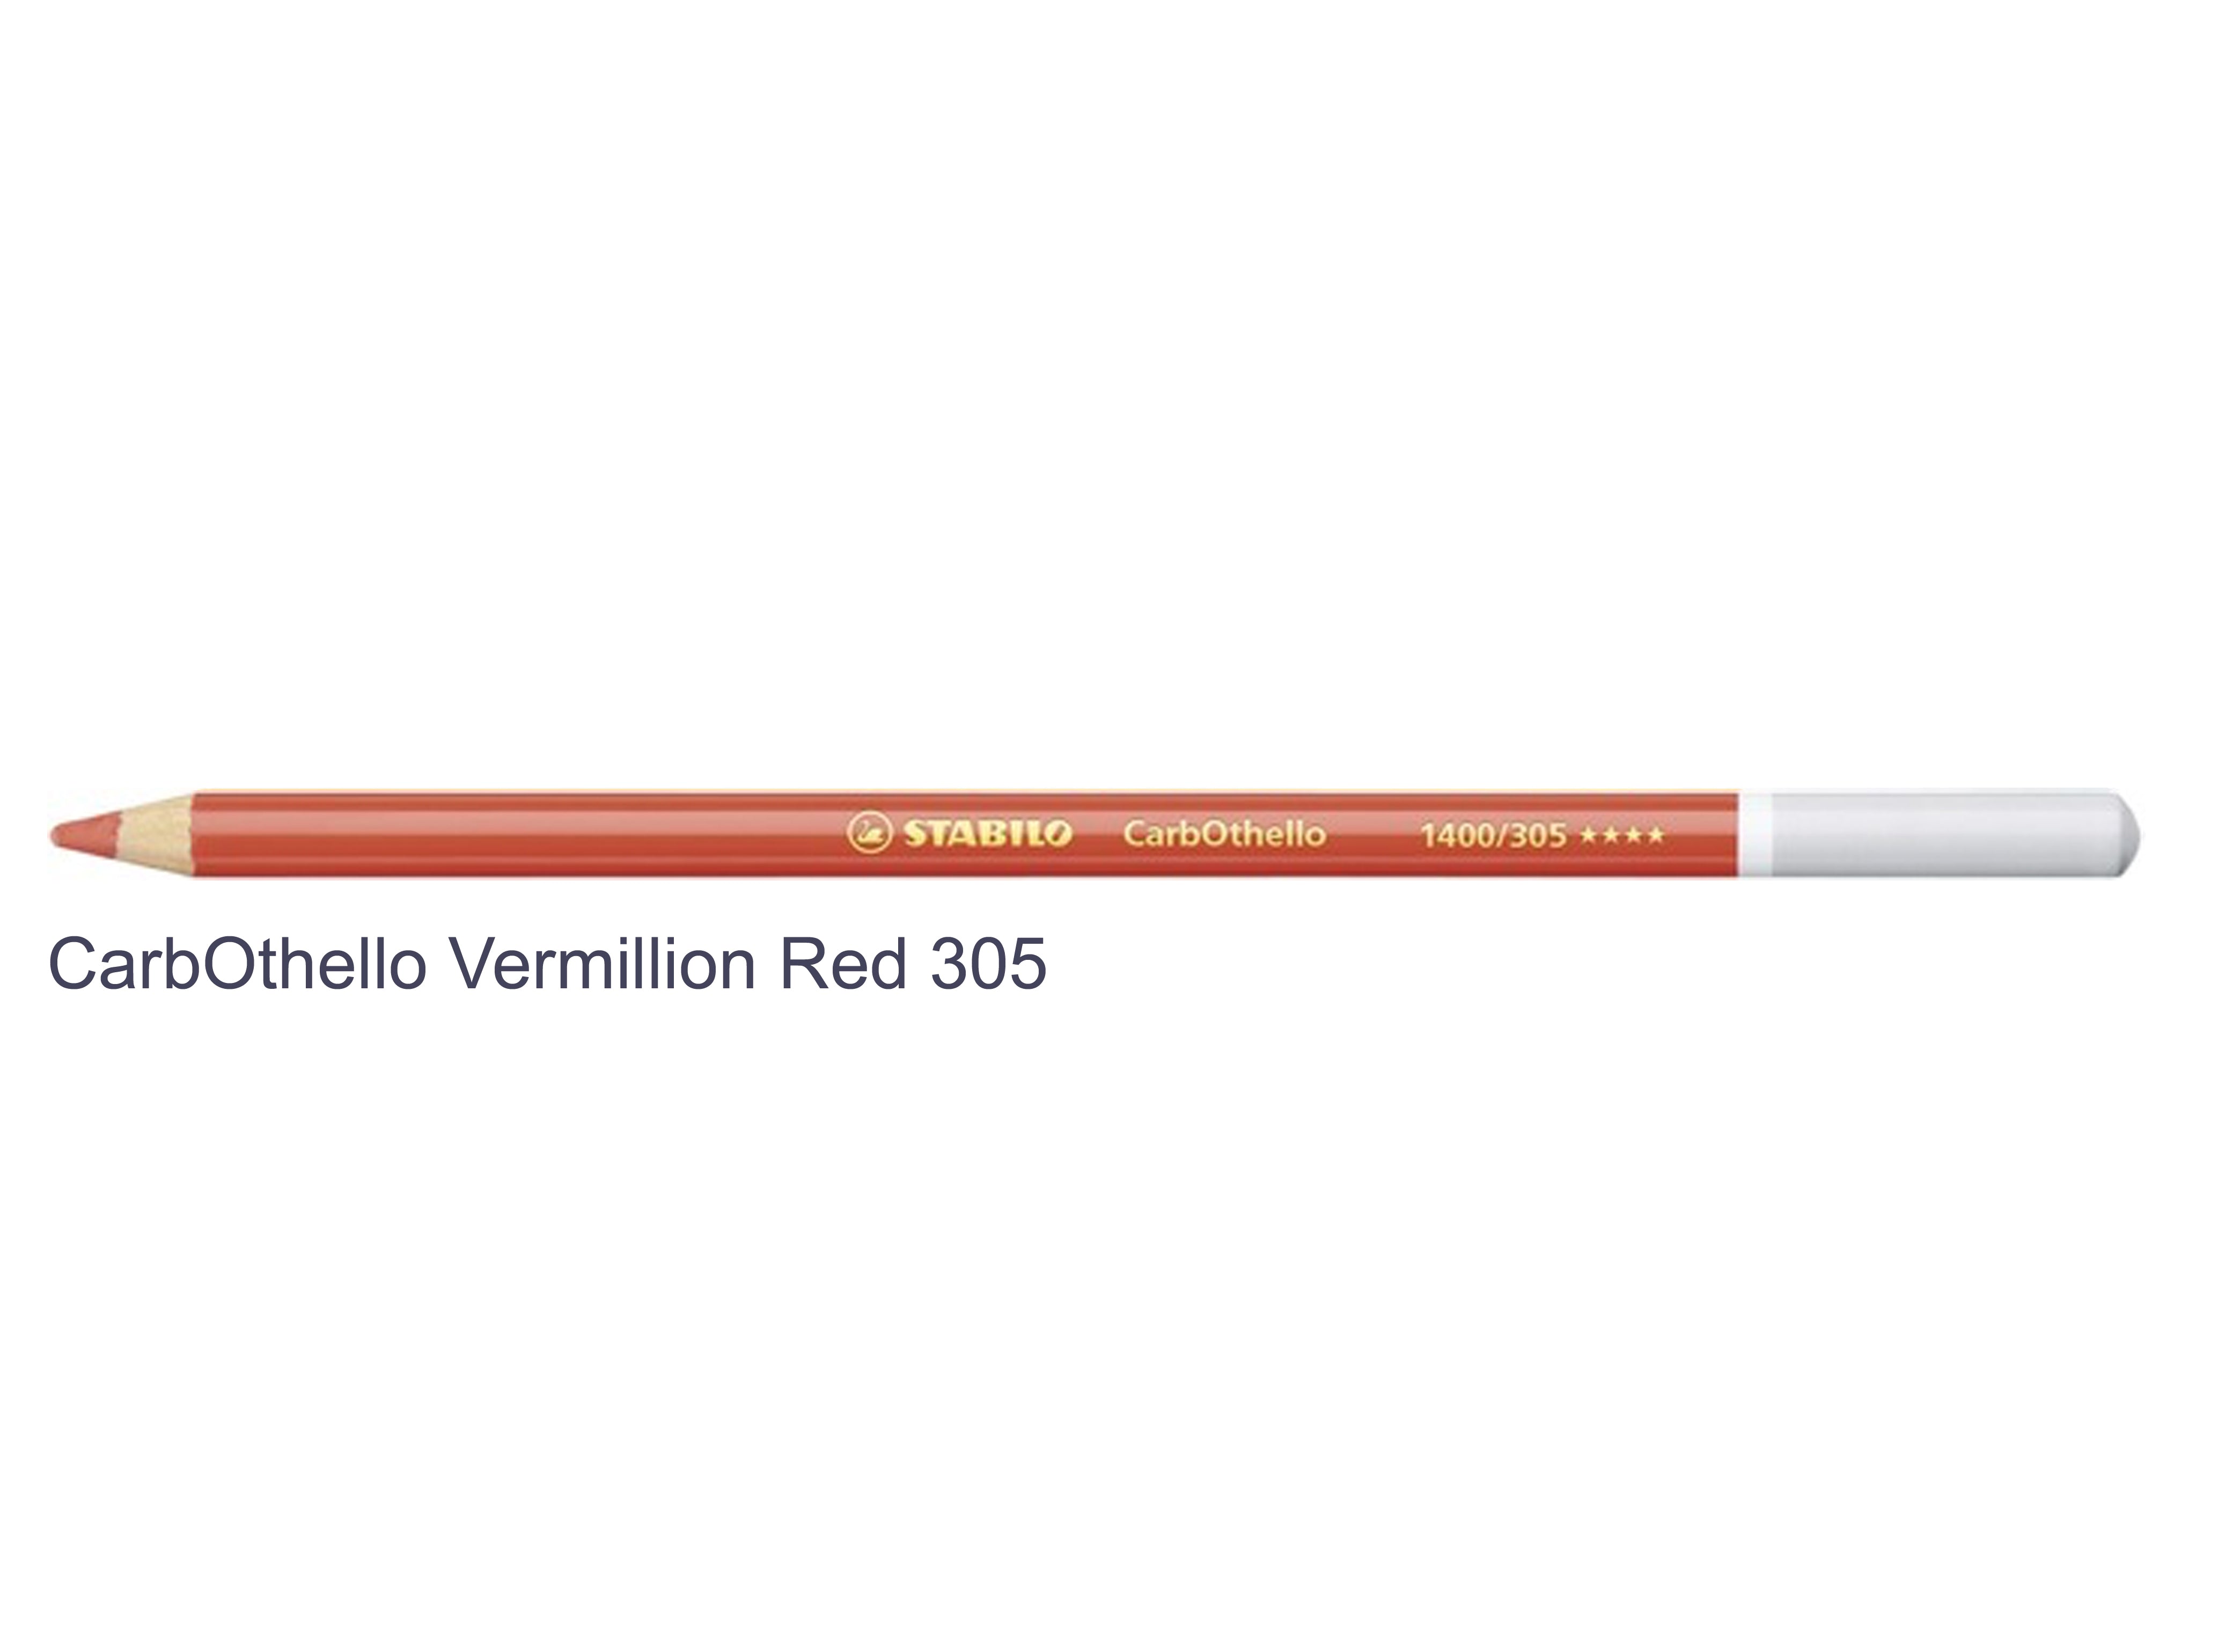 Vermillion red 305 STABILO CarbOthello chalk-pastel pencils